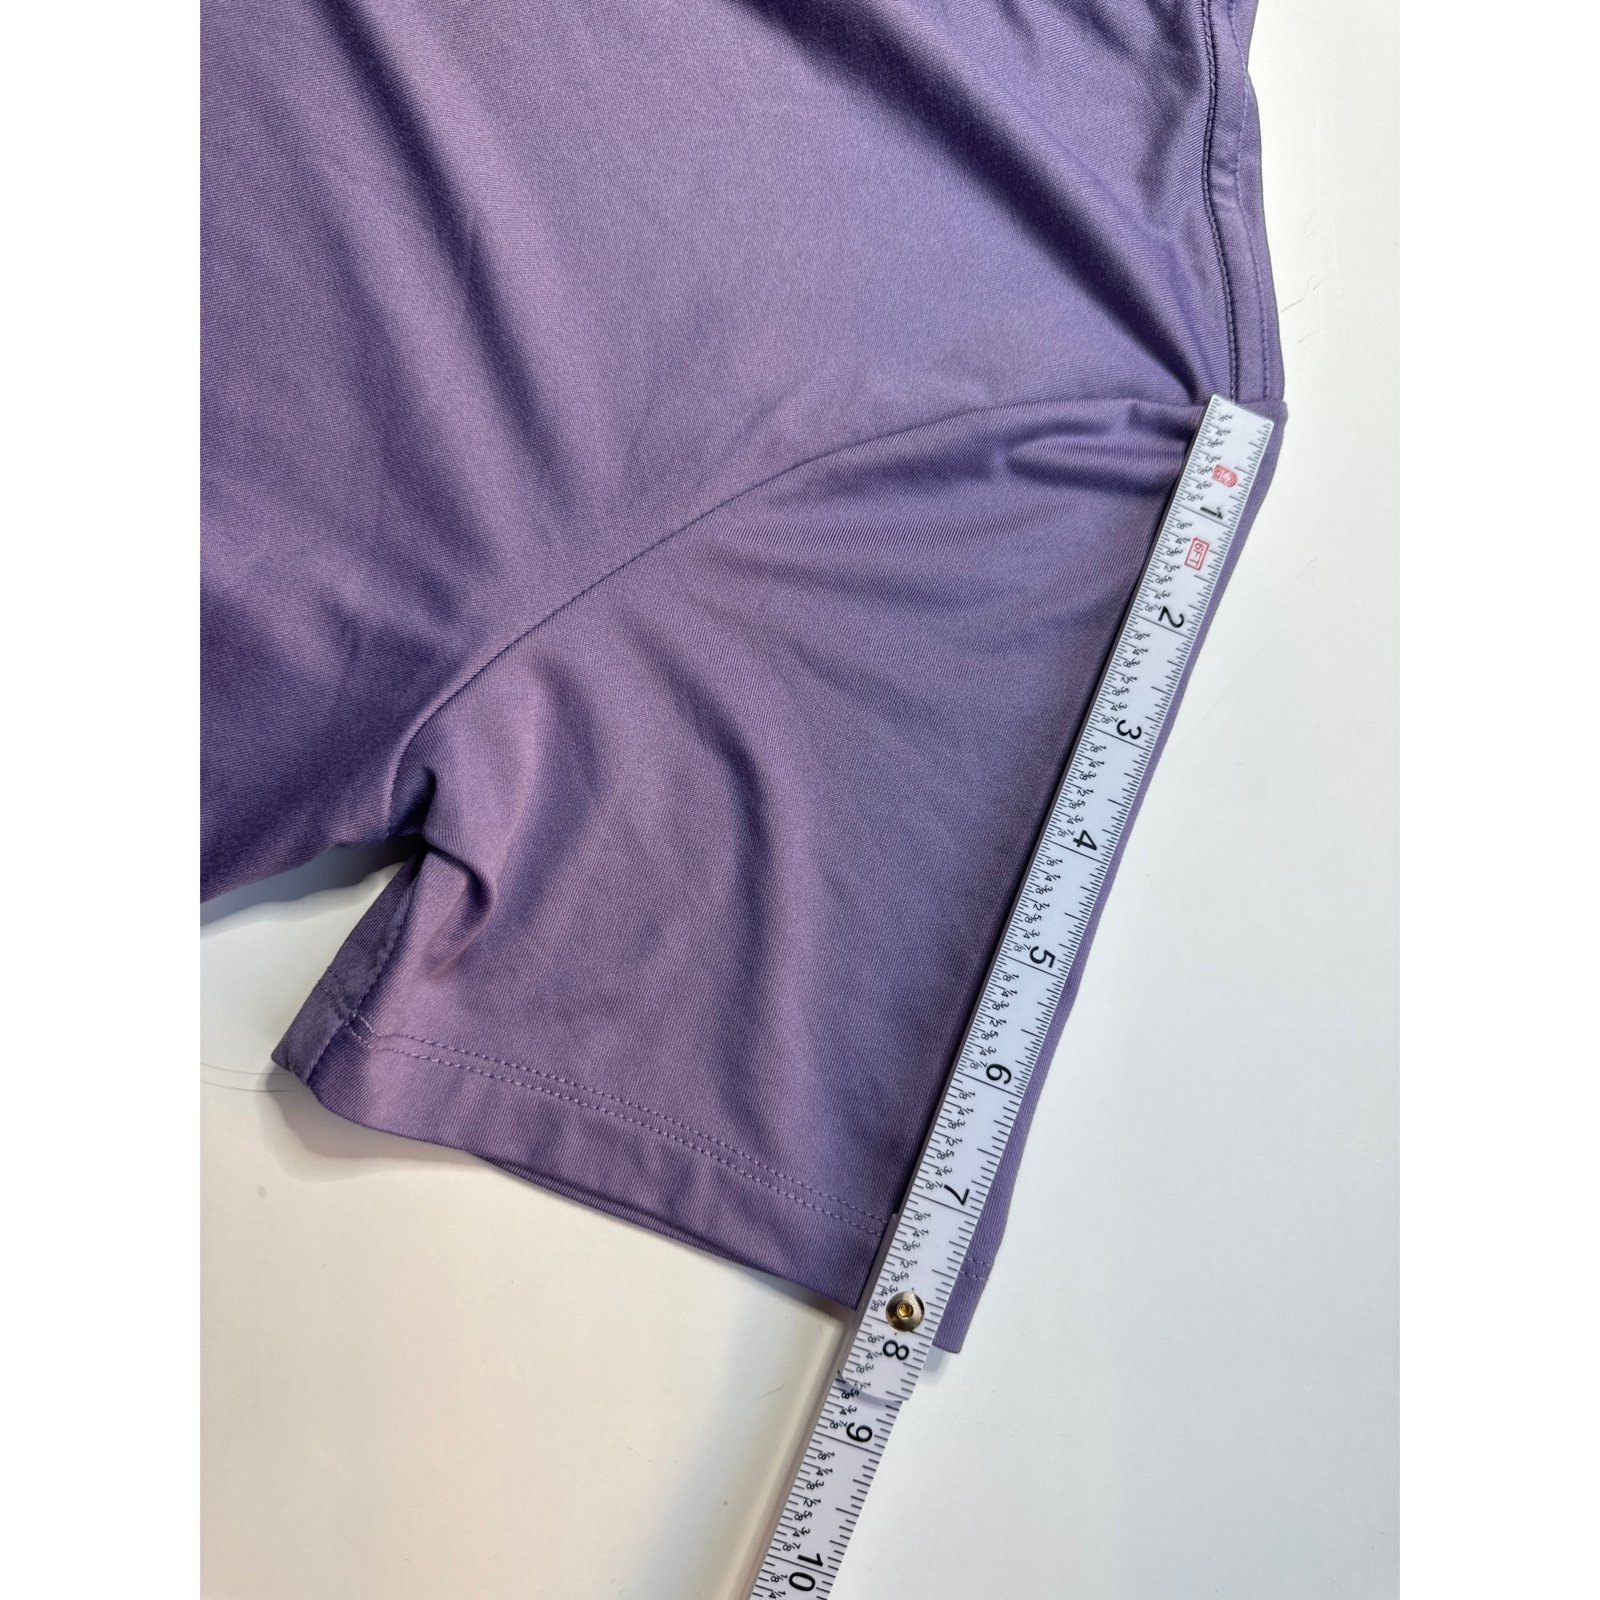 reasonable price Fabletics Sweat Resistant Short Sleeve T shirt kvgJJZSo9 hot sale